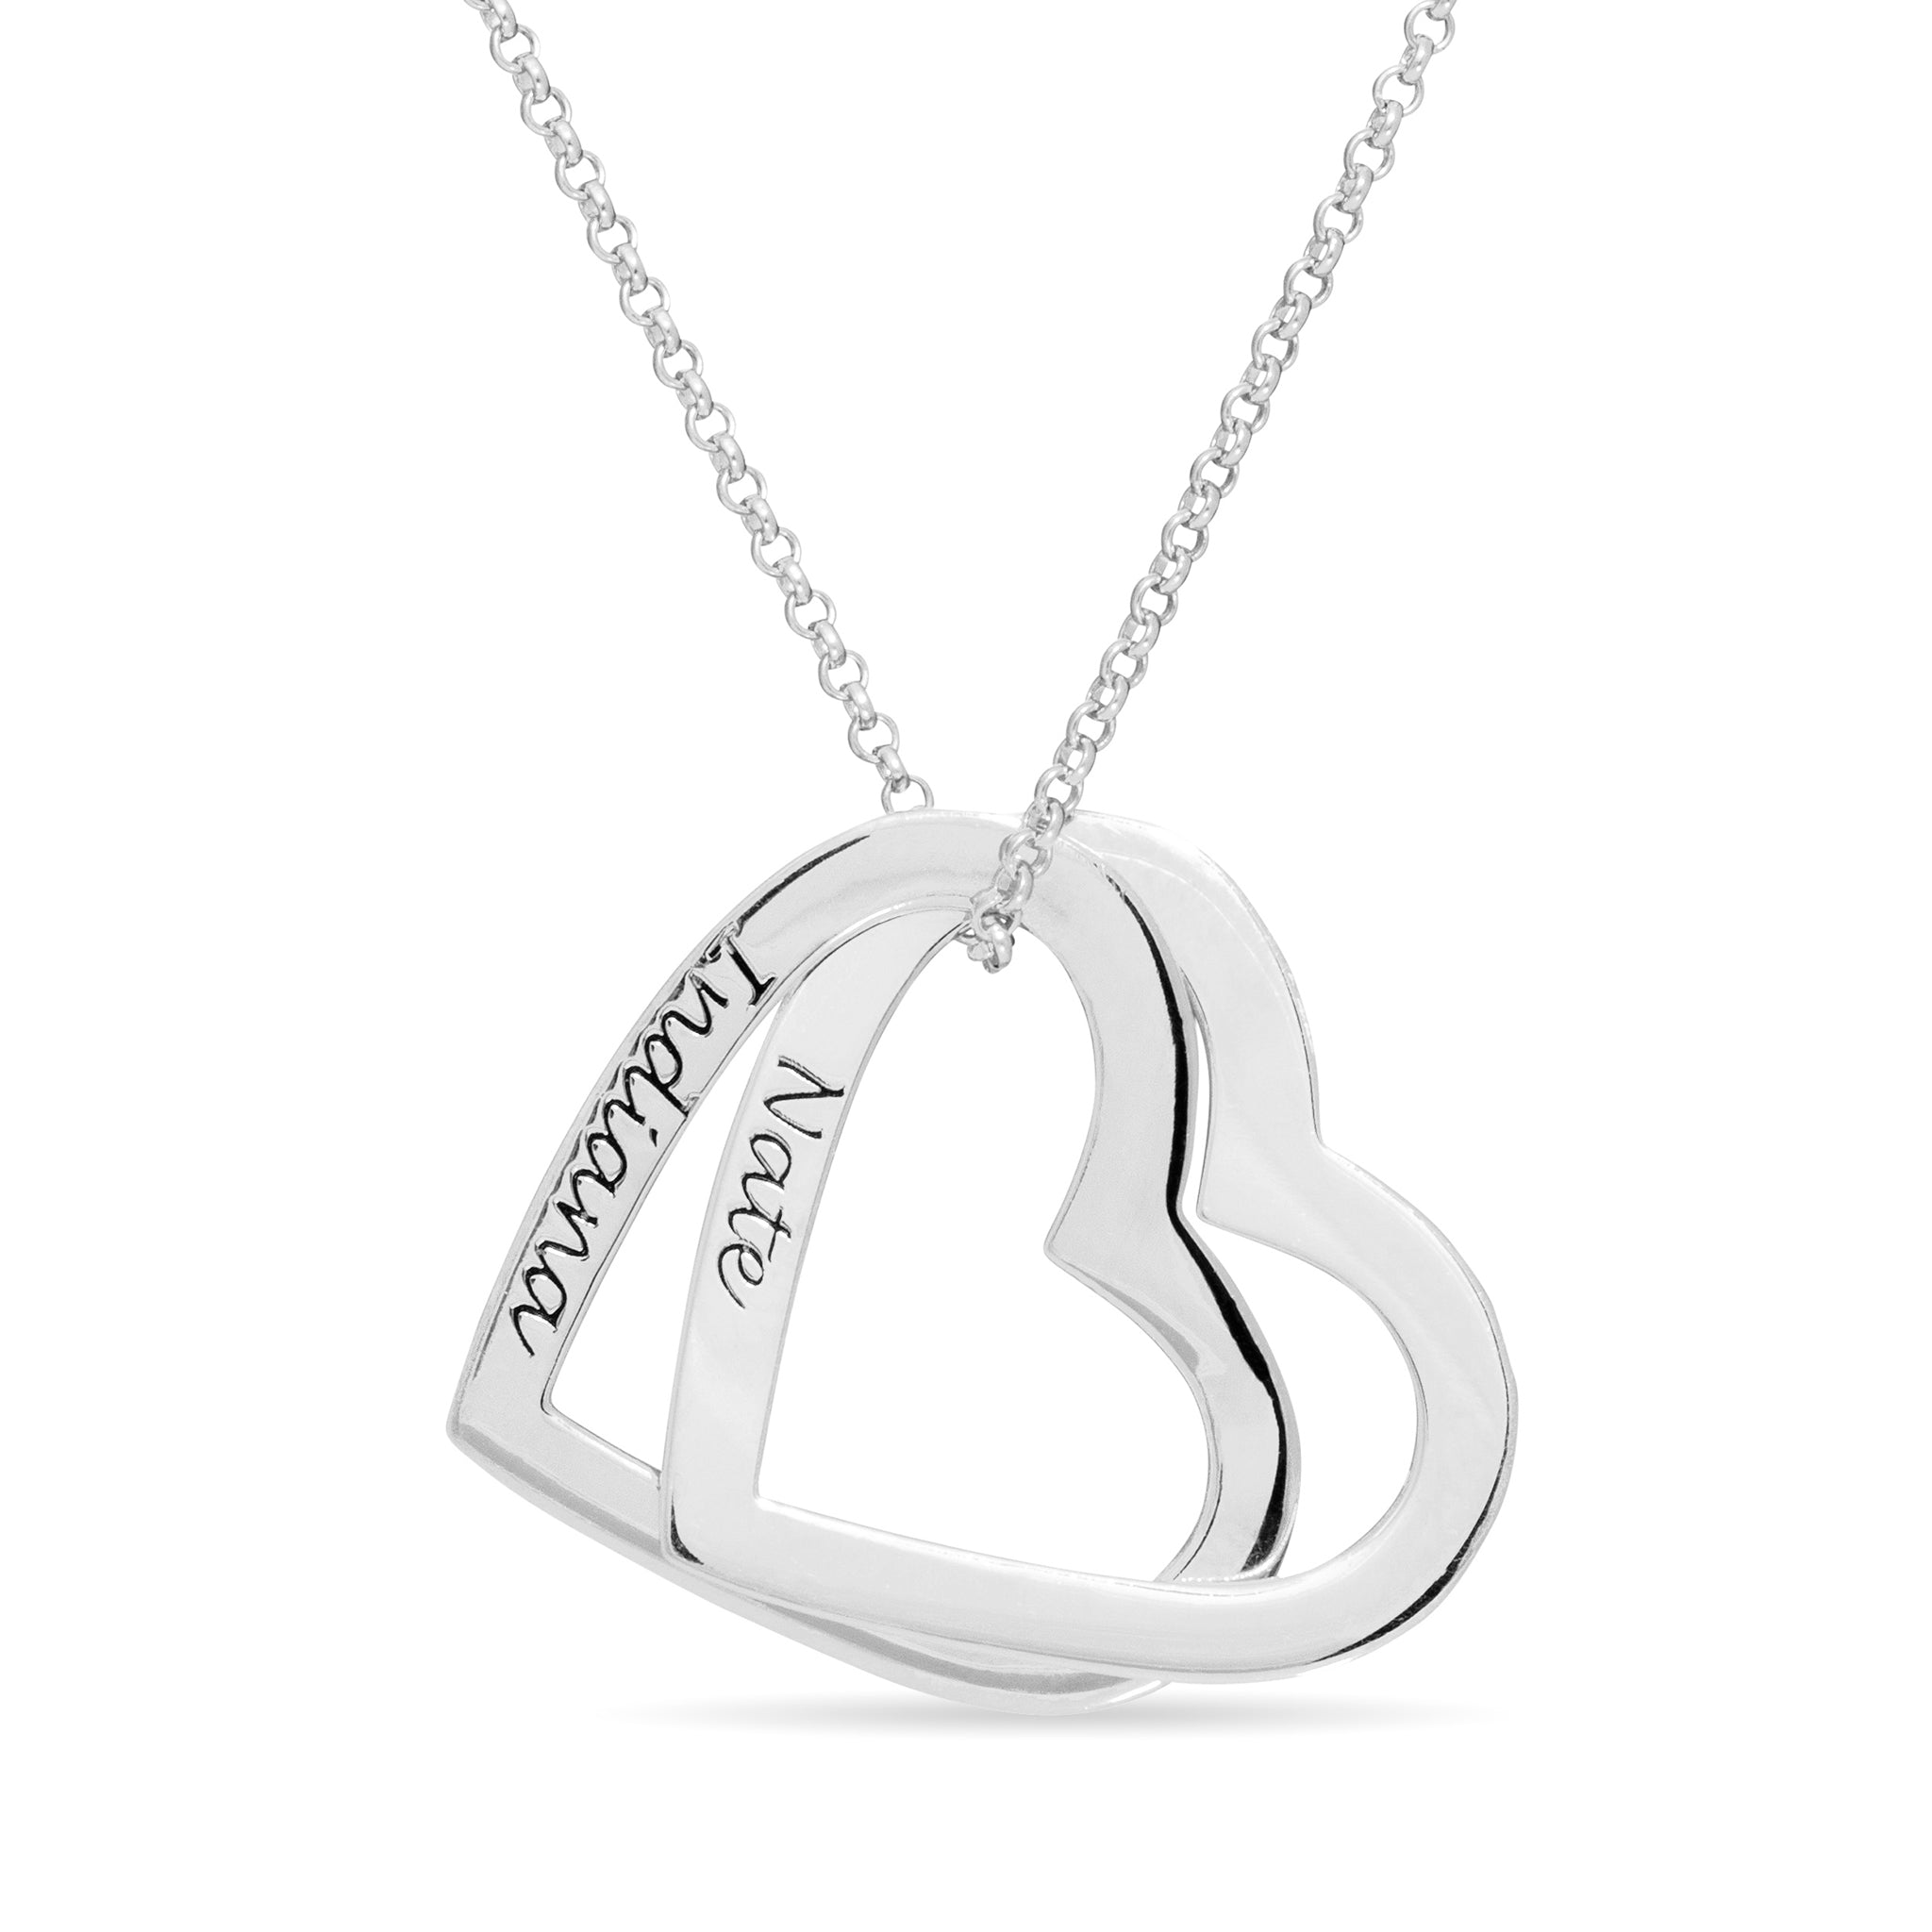 Custom Engraved Heart Charm Necklace Personalized Gift - Etsy | Etsy  personalized gifts, Engraved hearts, Heart necklace tiffany